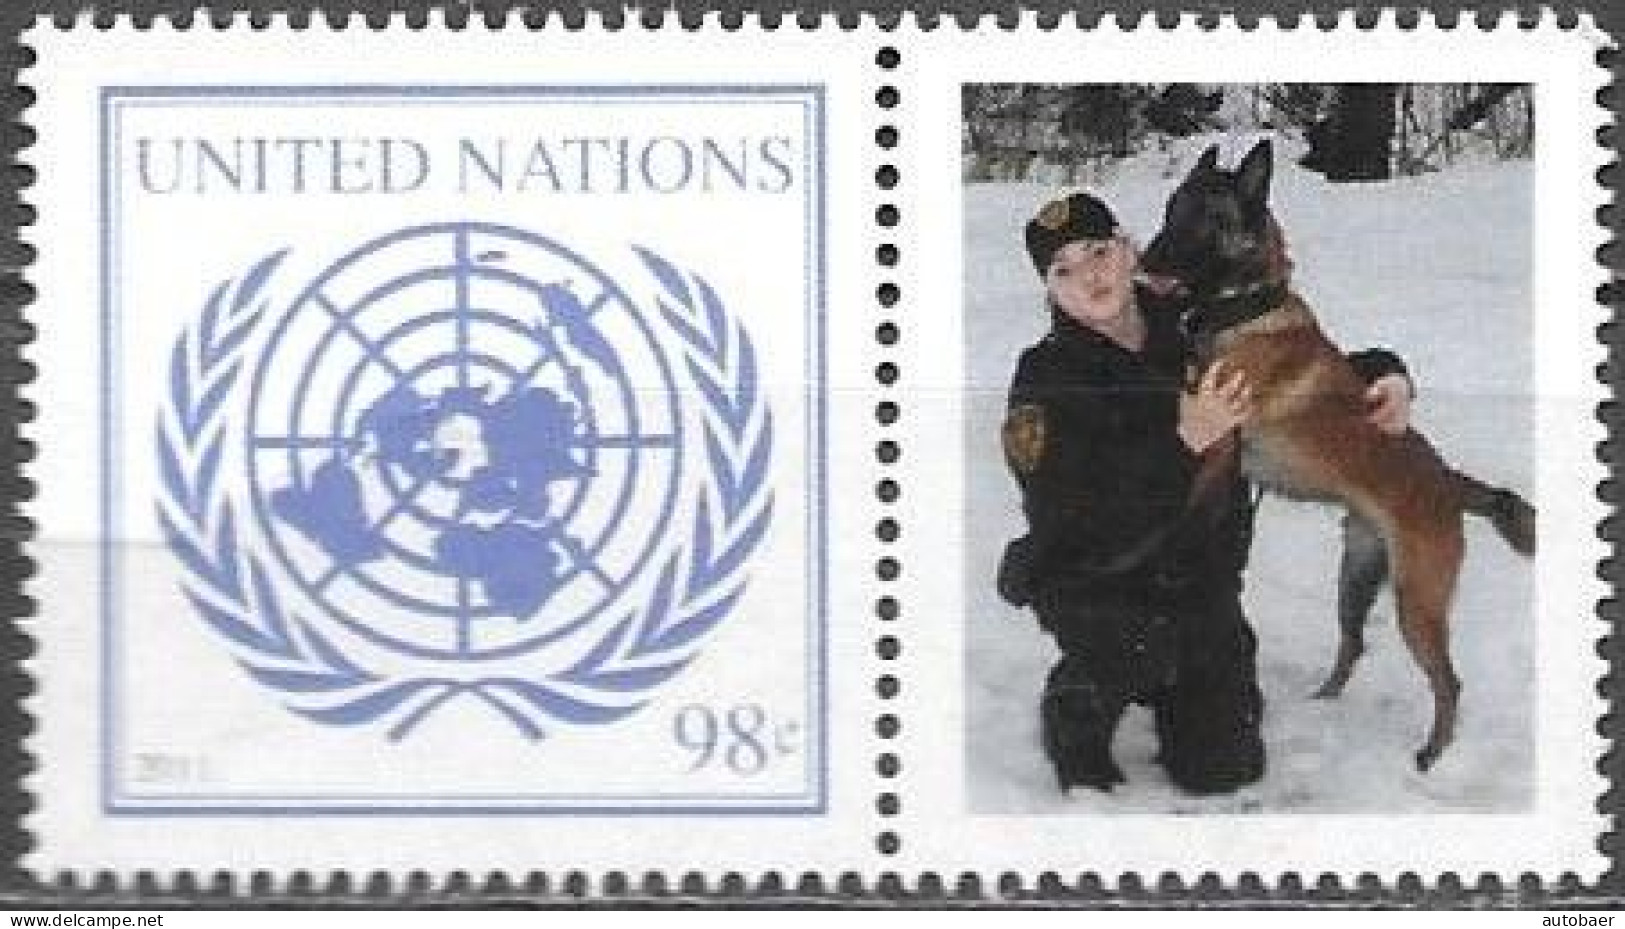 United Nations UNO UN Vereinte Nationen New York 2011 Greetings Working Dogs Mi.No.1253 Label MNH ** Neuf - Neufs